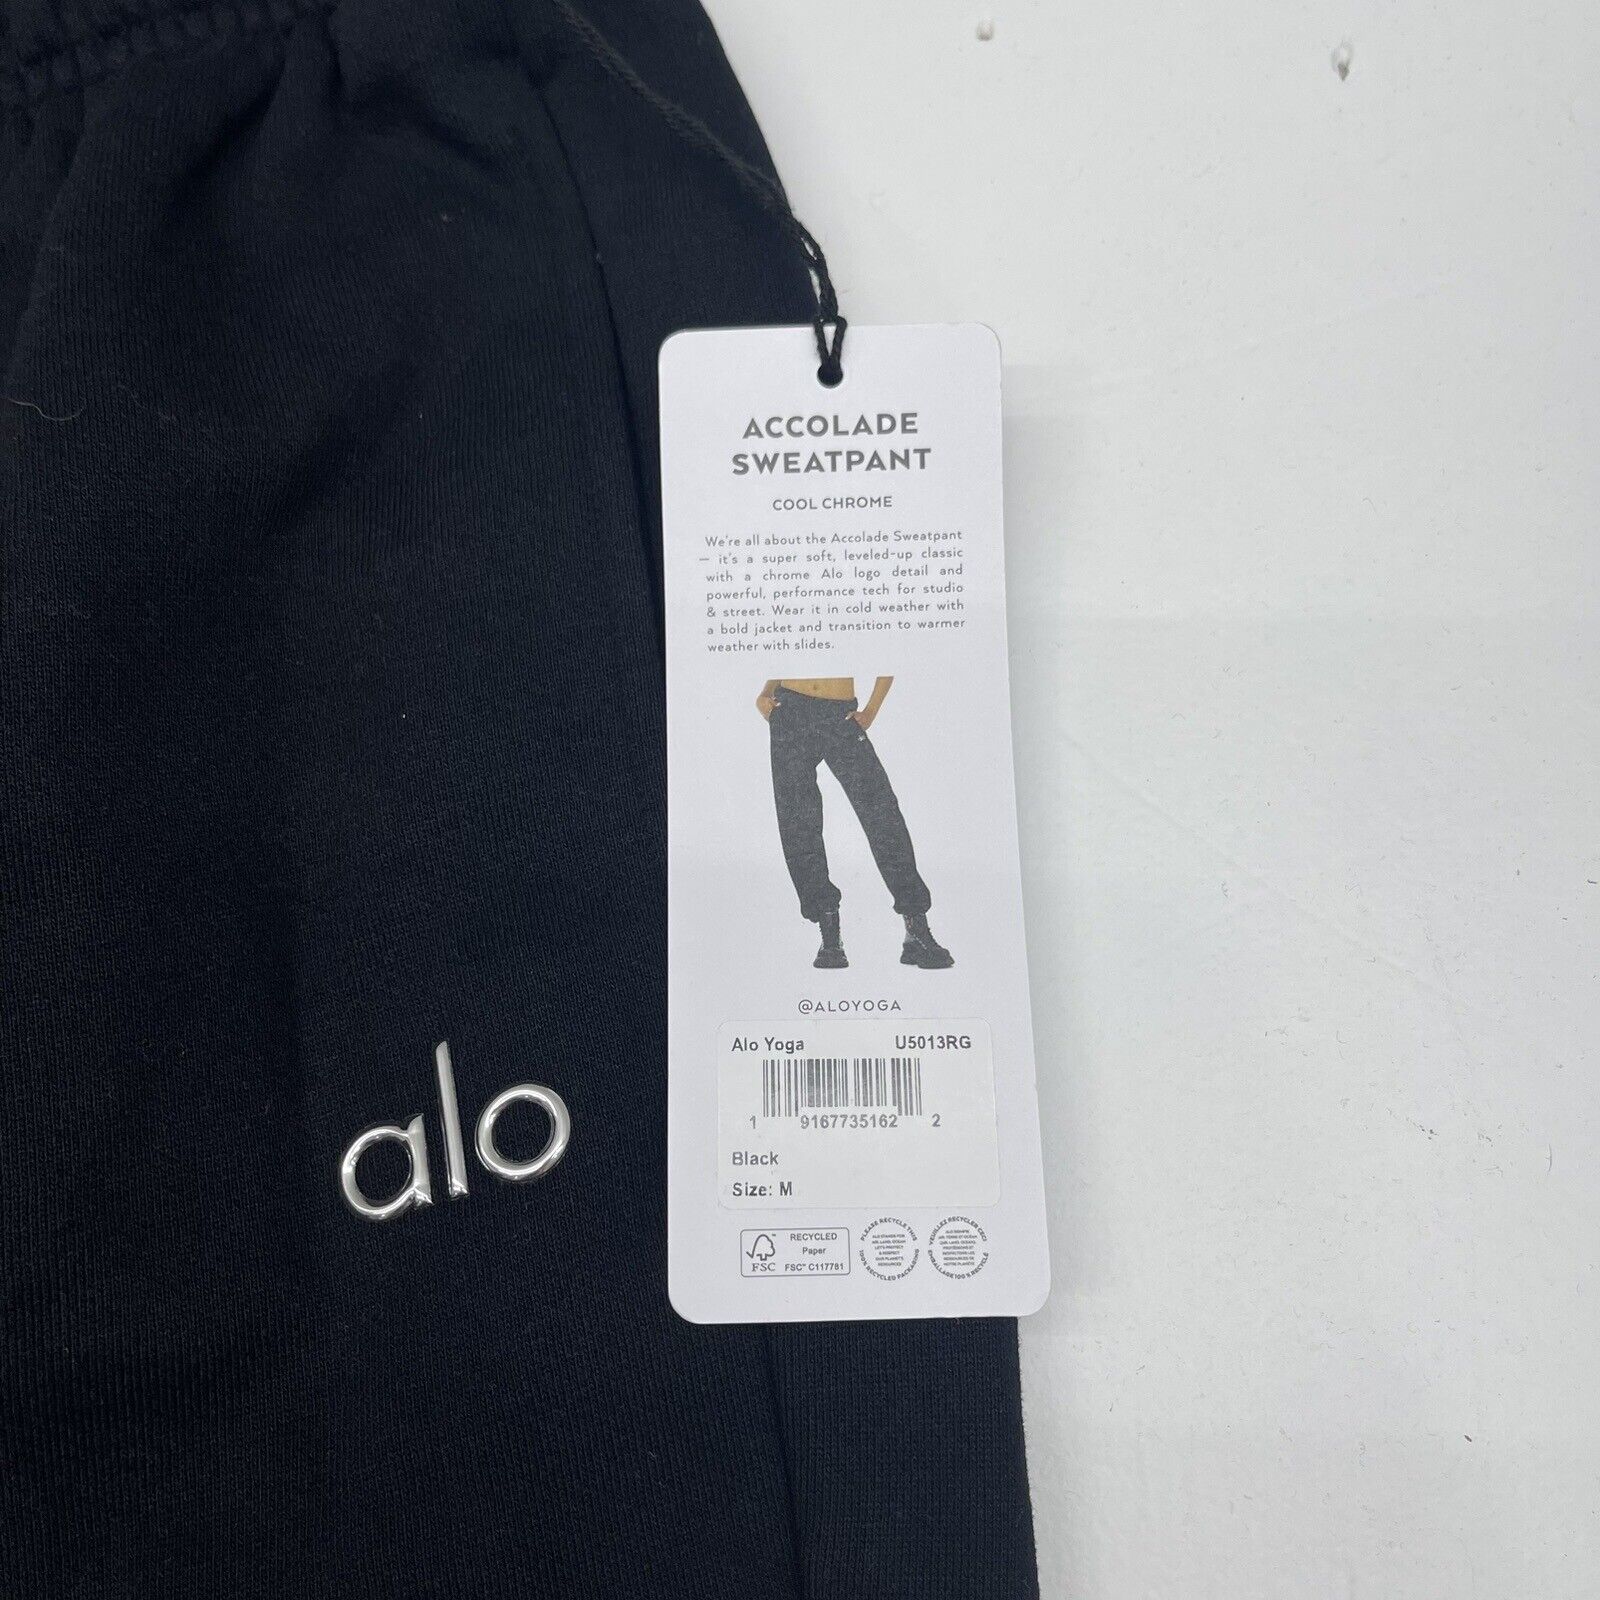 Alo Accolade Sweatpants Black Women's Size Medium New $118